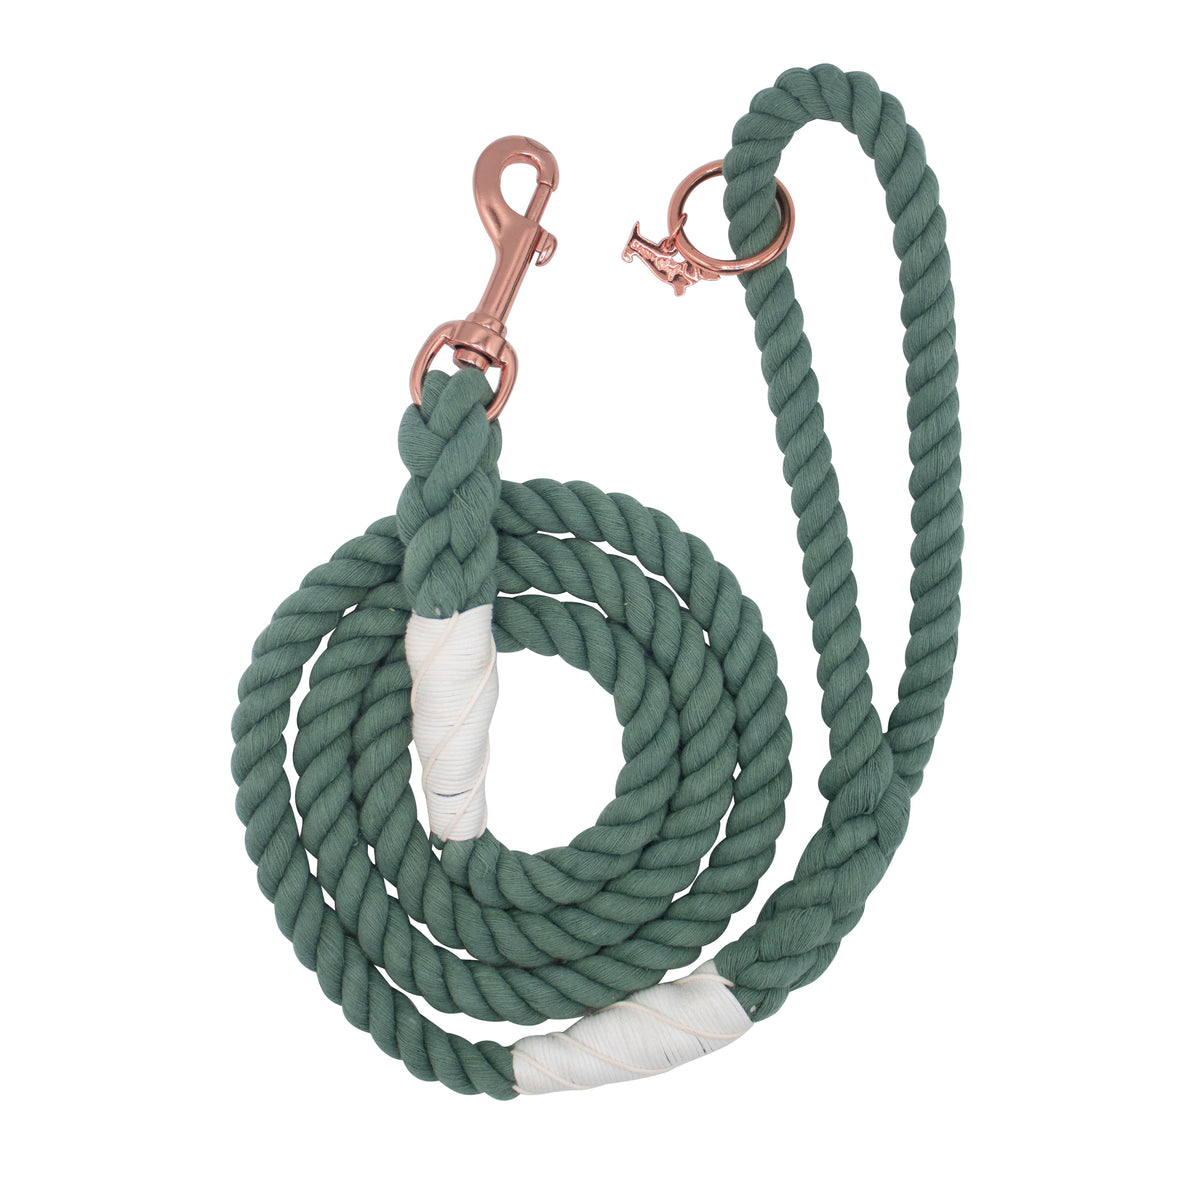 Dog Rope Leash - Amazon